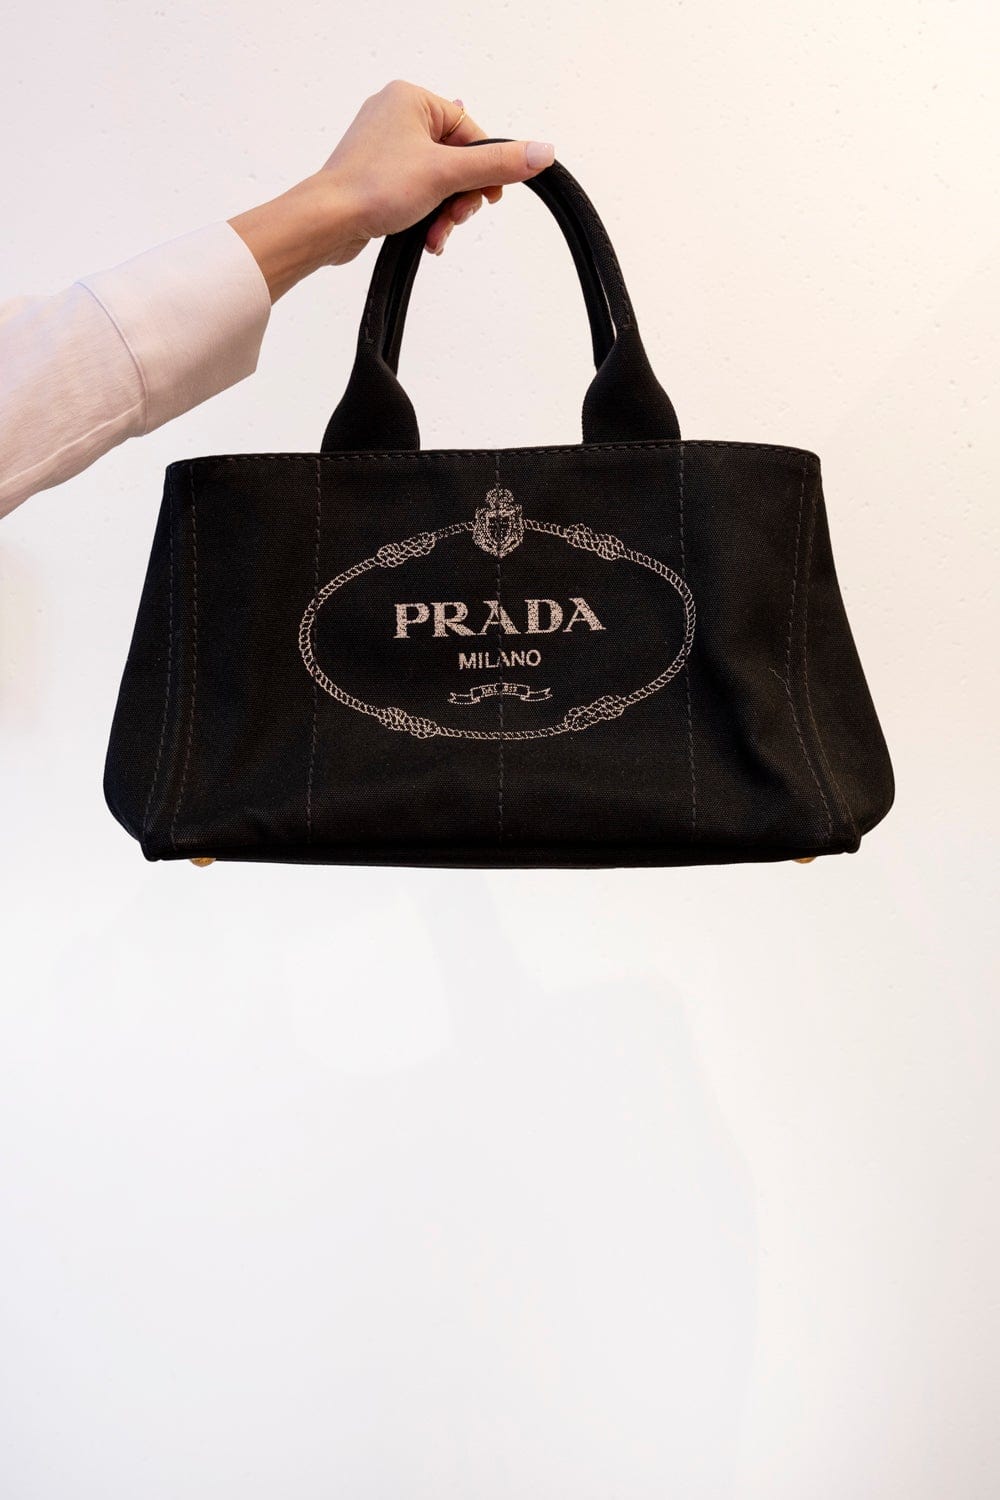 Prada Prada Medium Canapa Tote Black Handbag - AWL2328